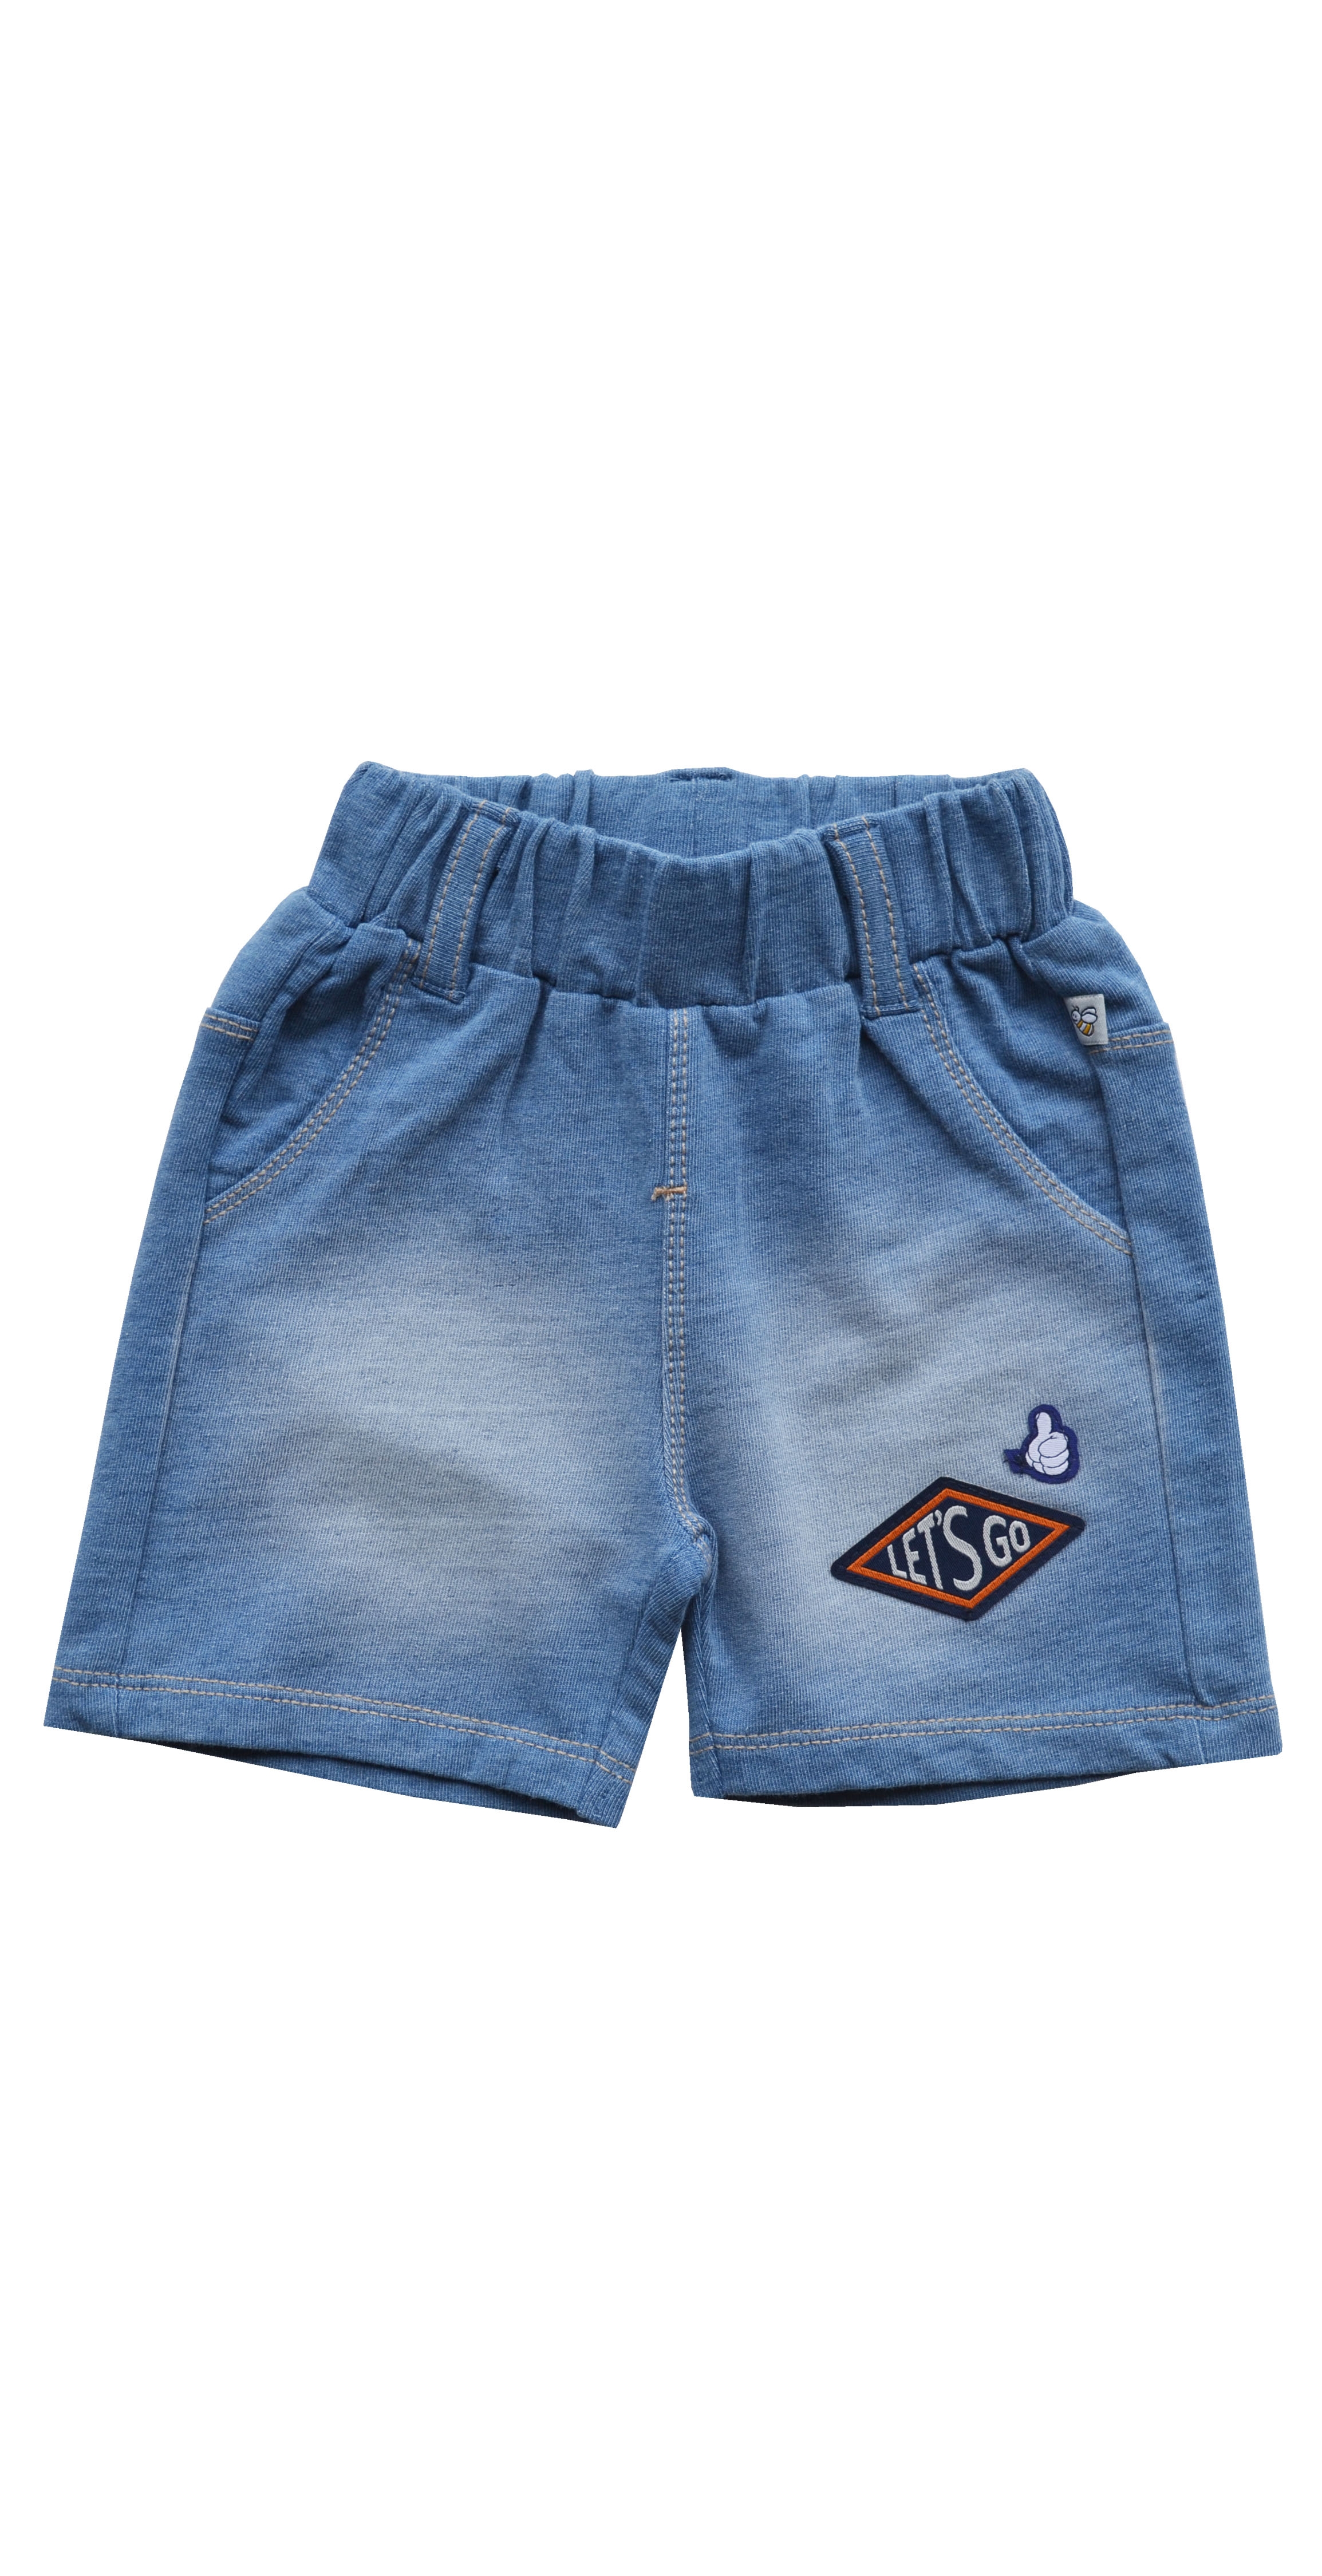 Boys Denim Shorts with Lets Go Applique(95% Cotton 5% Elasthan Denim Fleece)